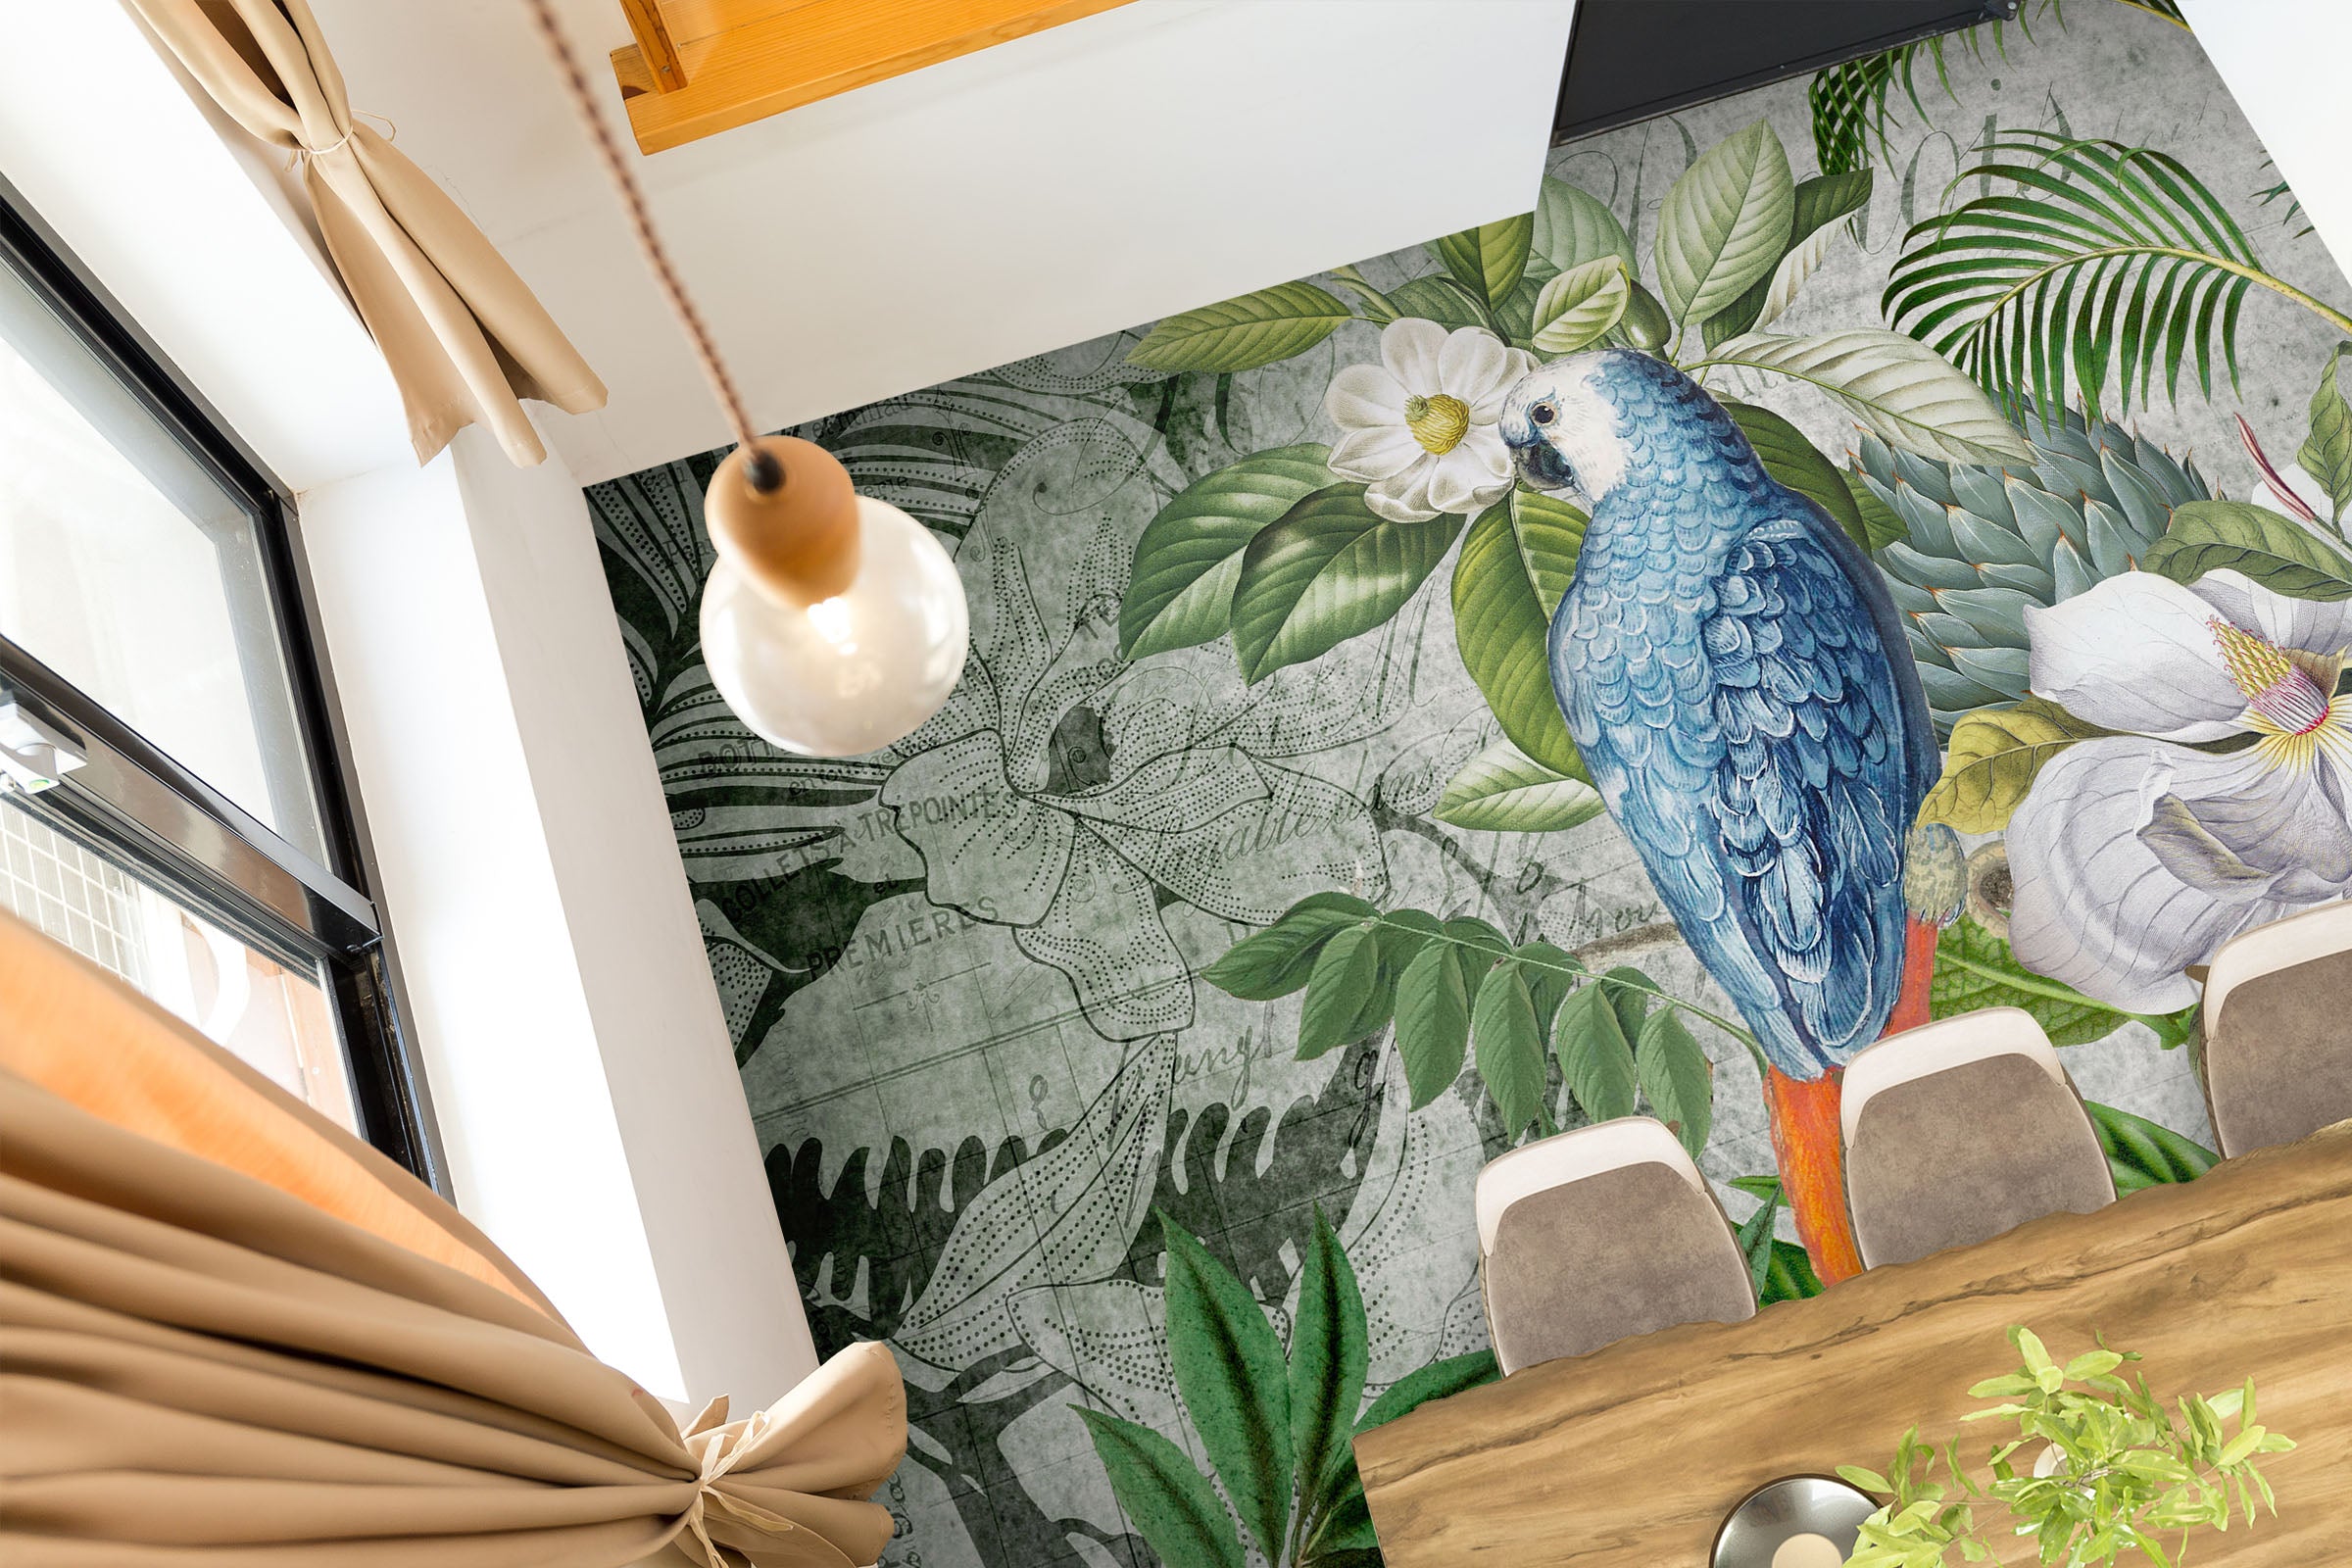 3D Leaves Blue Parrot 104164 Andrea Haase Floor Mural